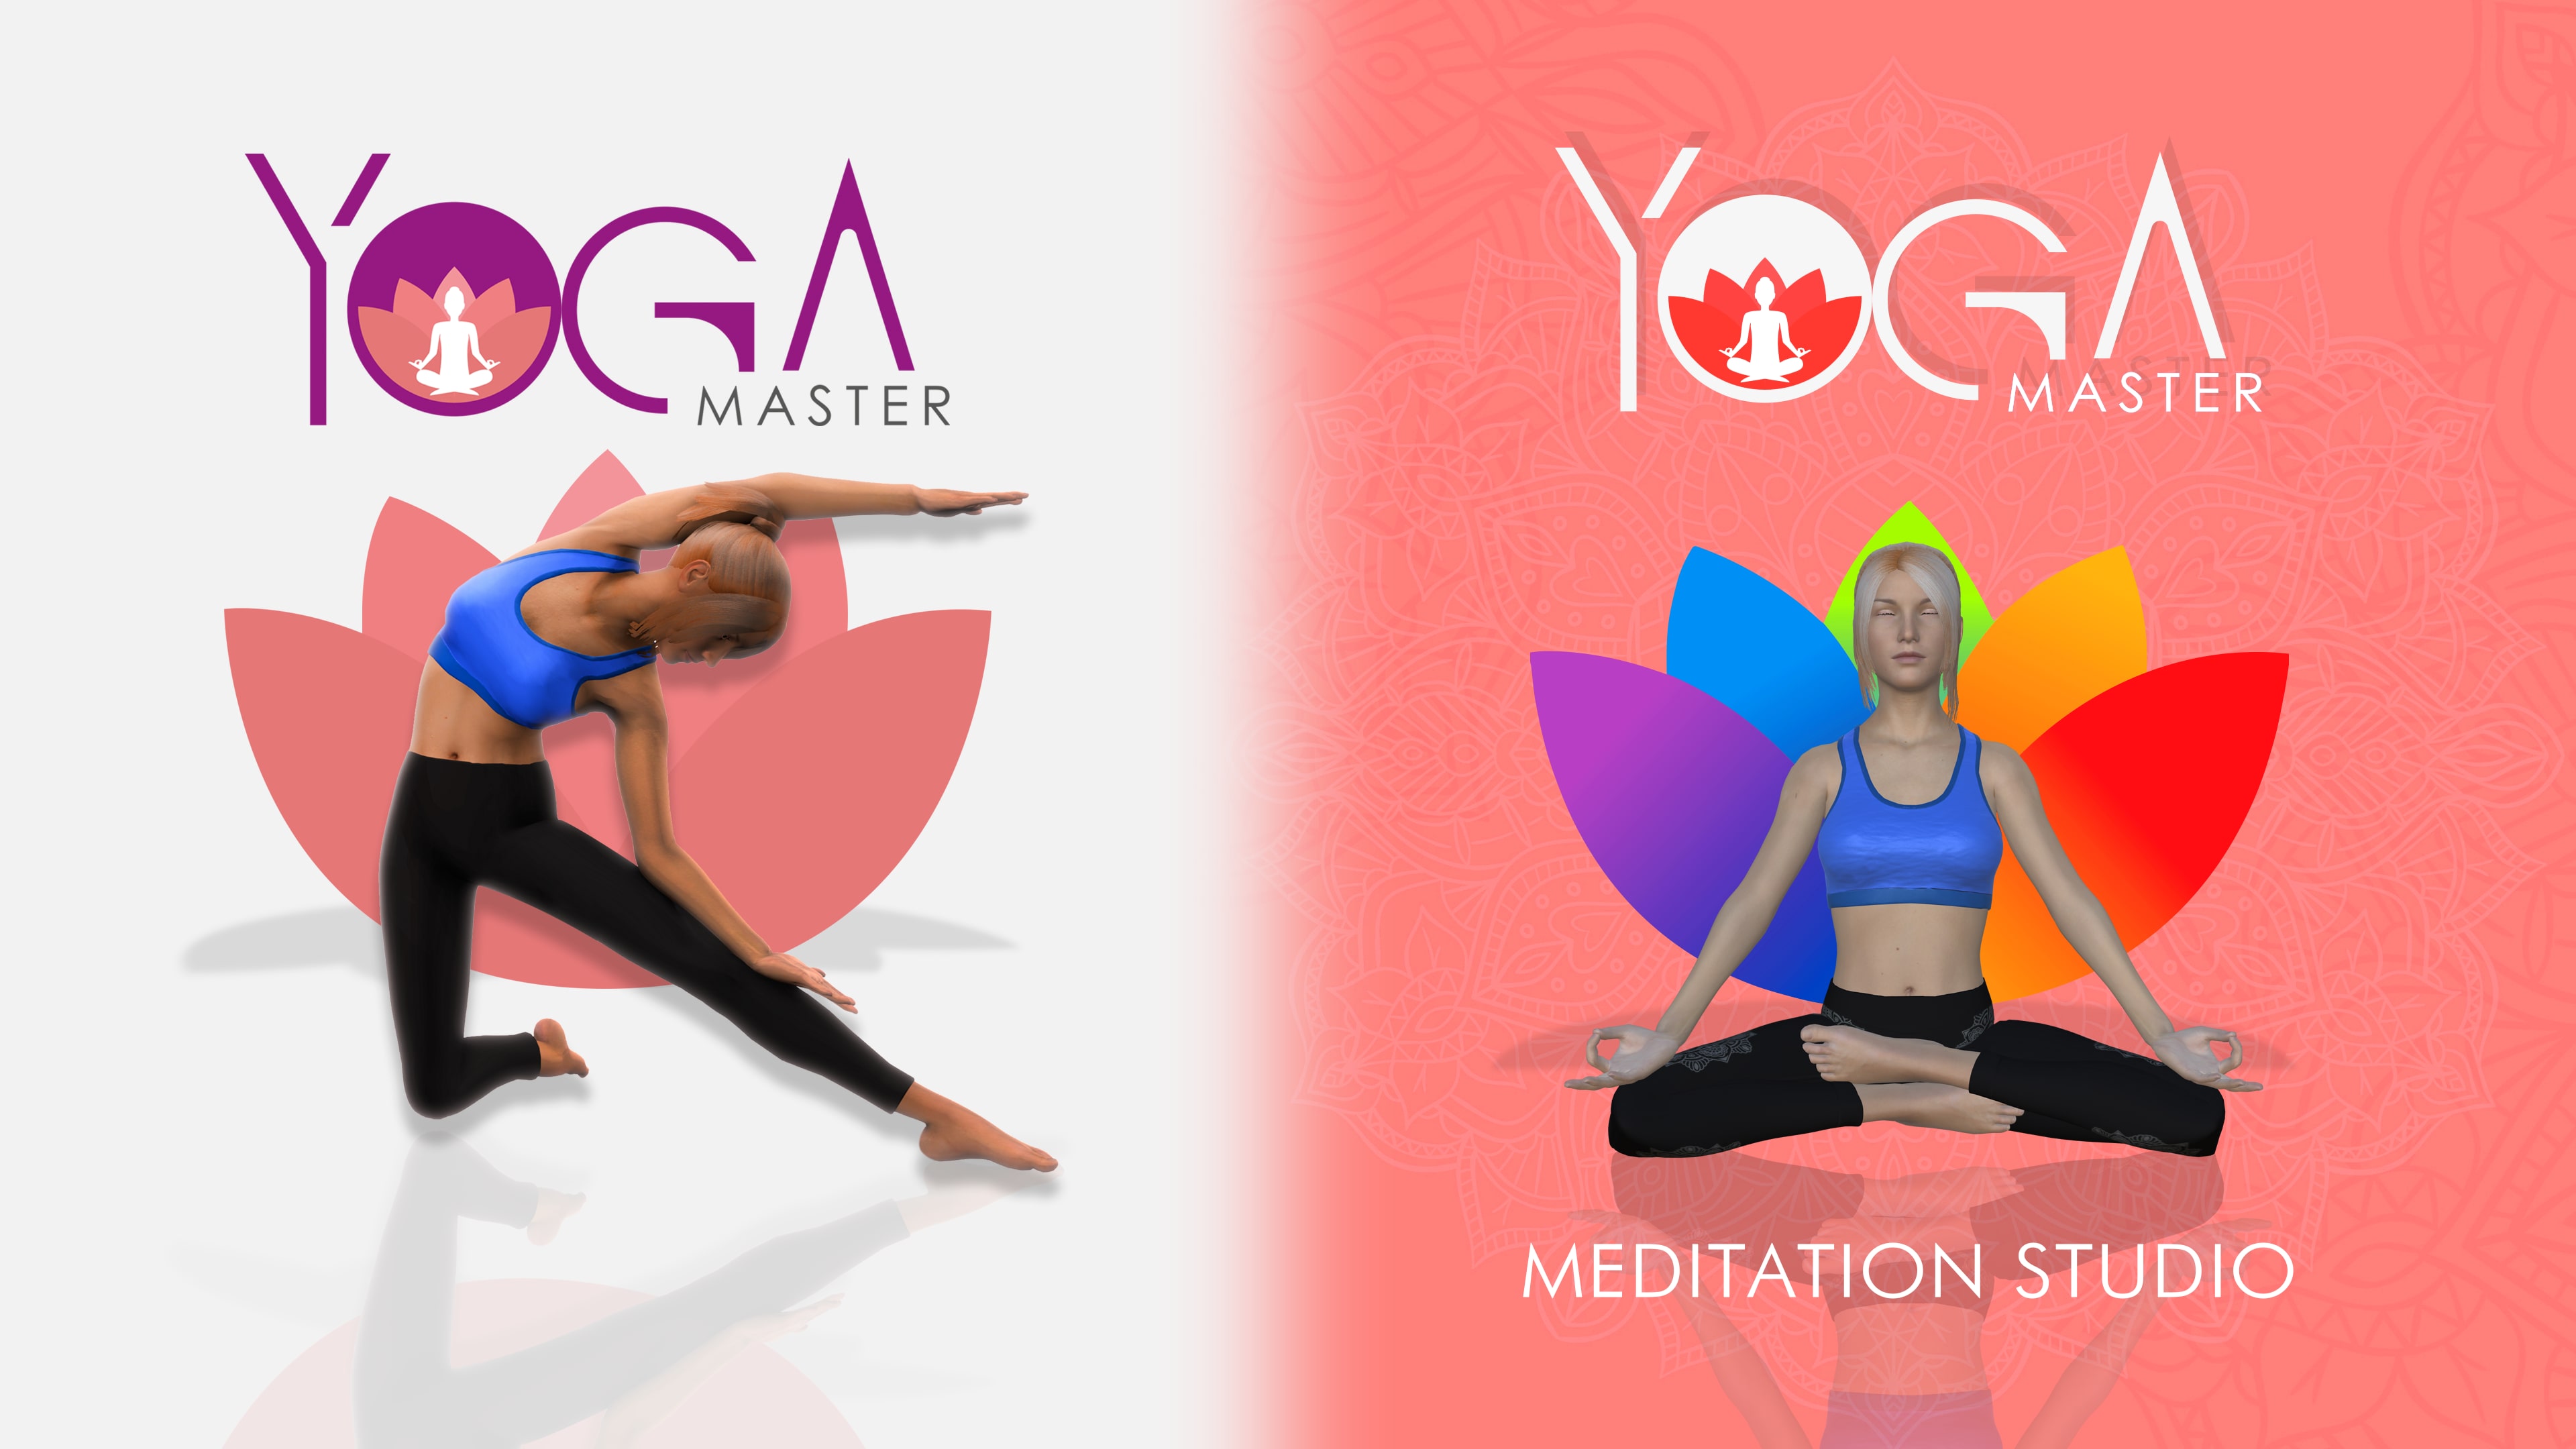 YOGA MASTER - Meditation Studio Bundle